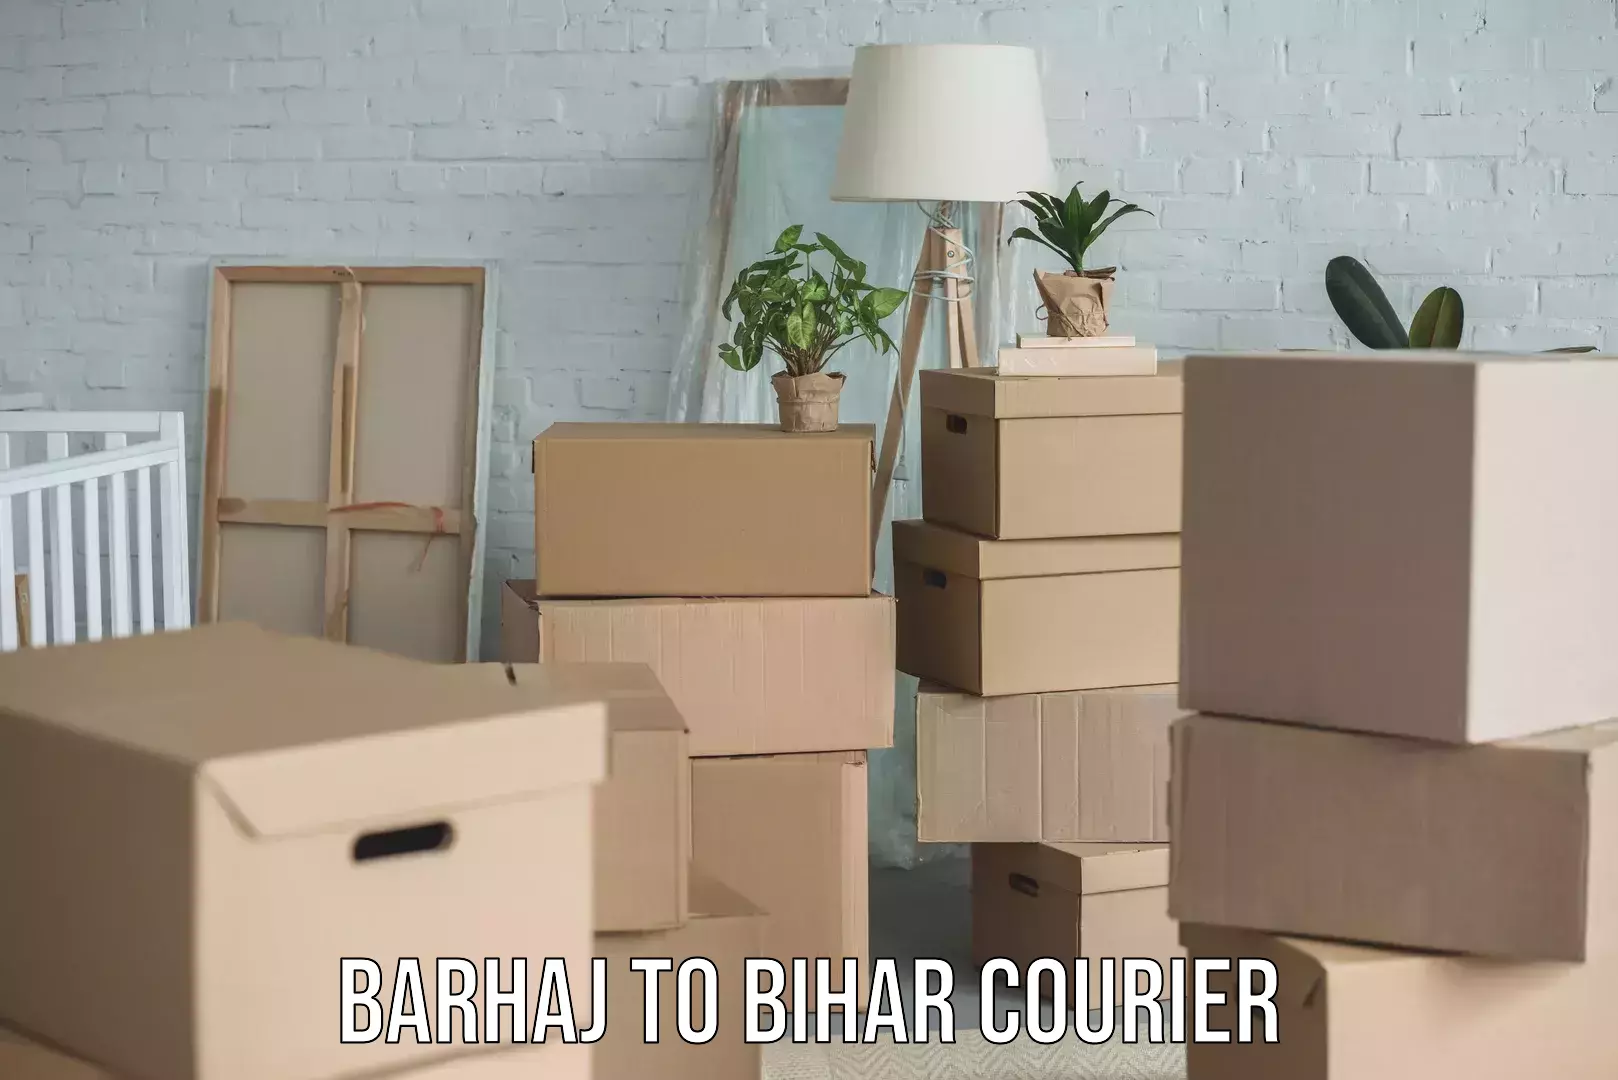 24-hour courier service Barhaj to Bihar